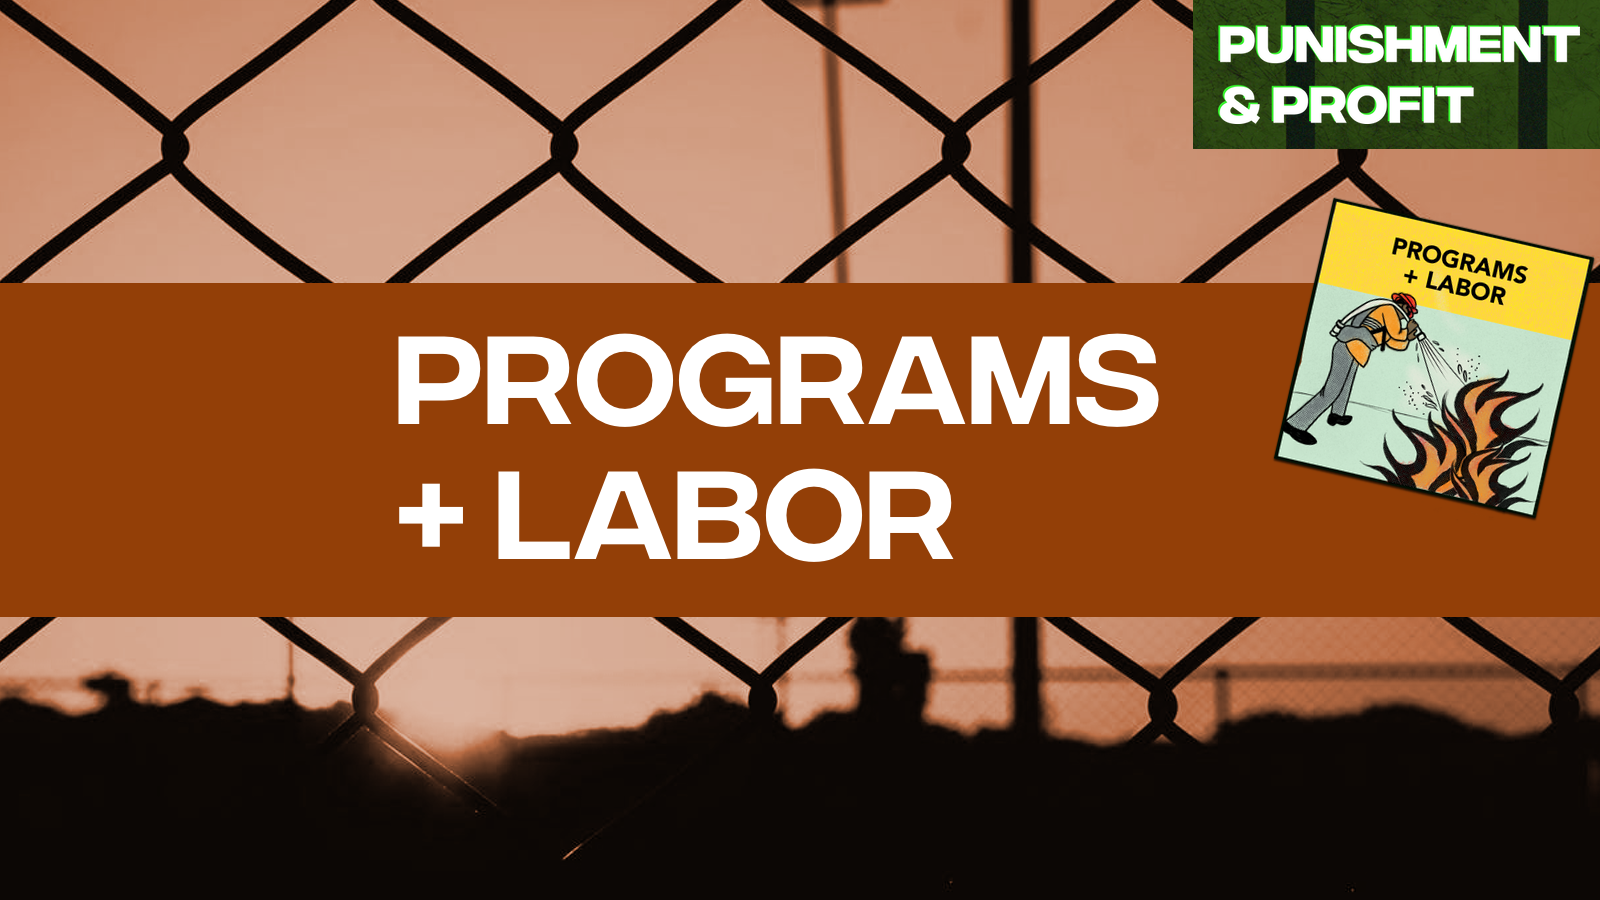 Punishment & Profit: Programs & Labor